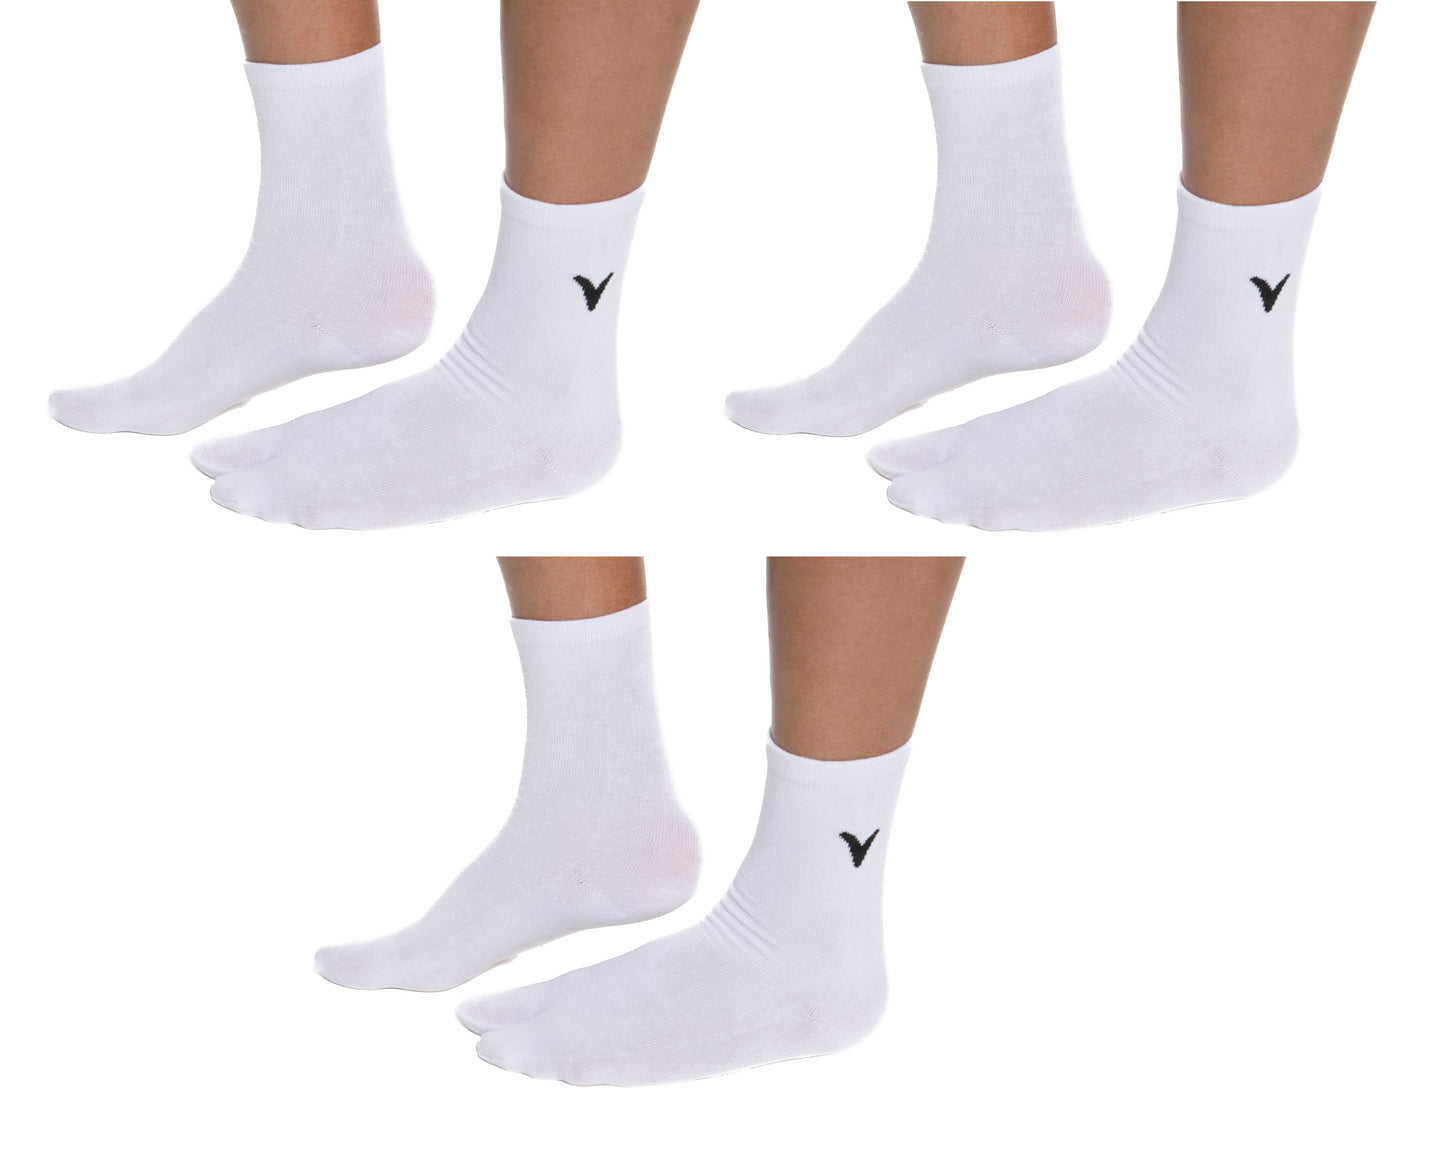 3 Pairs - Split-Toe Tabi Socks Black, White, Khaki and Grey Options Solid Casual Crew